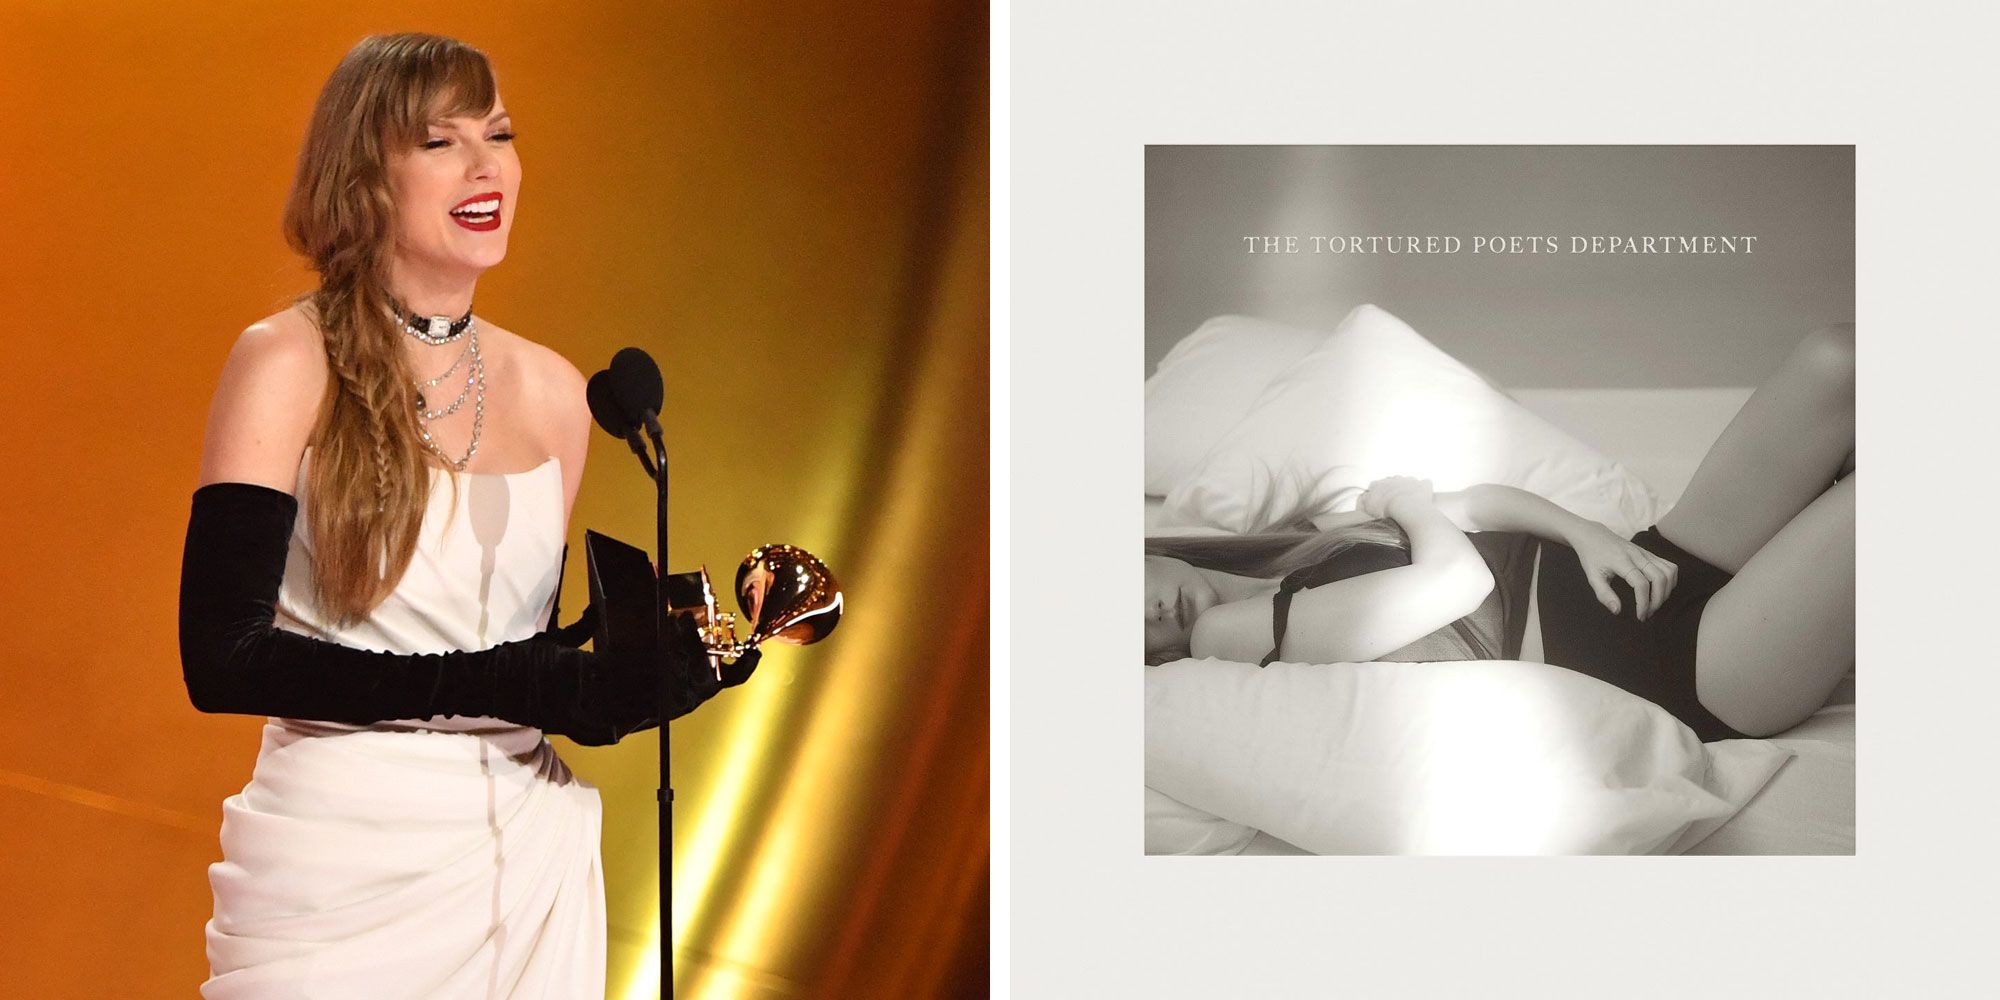 Lady Gaga Hints She's Working on New Album: 'Writing Lyrics in Bed